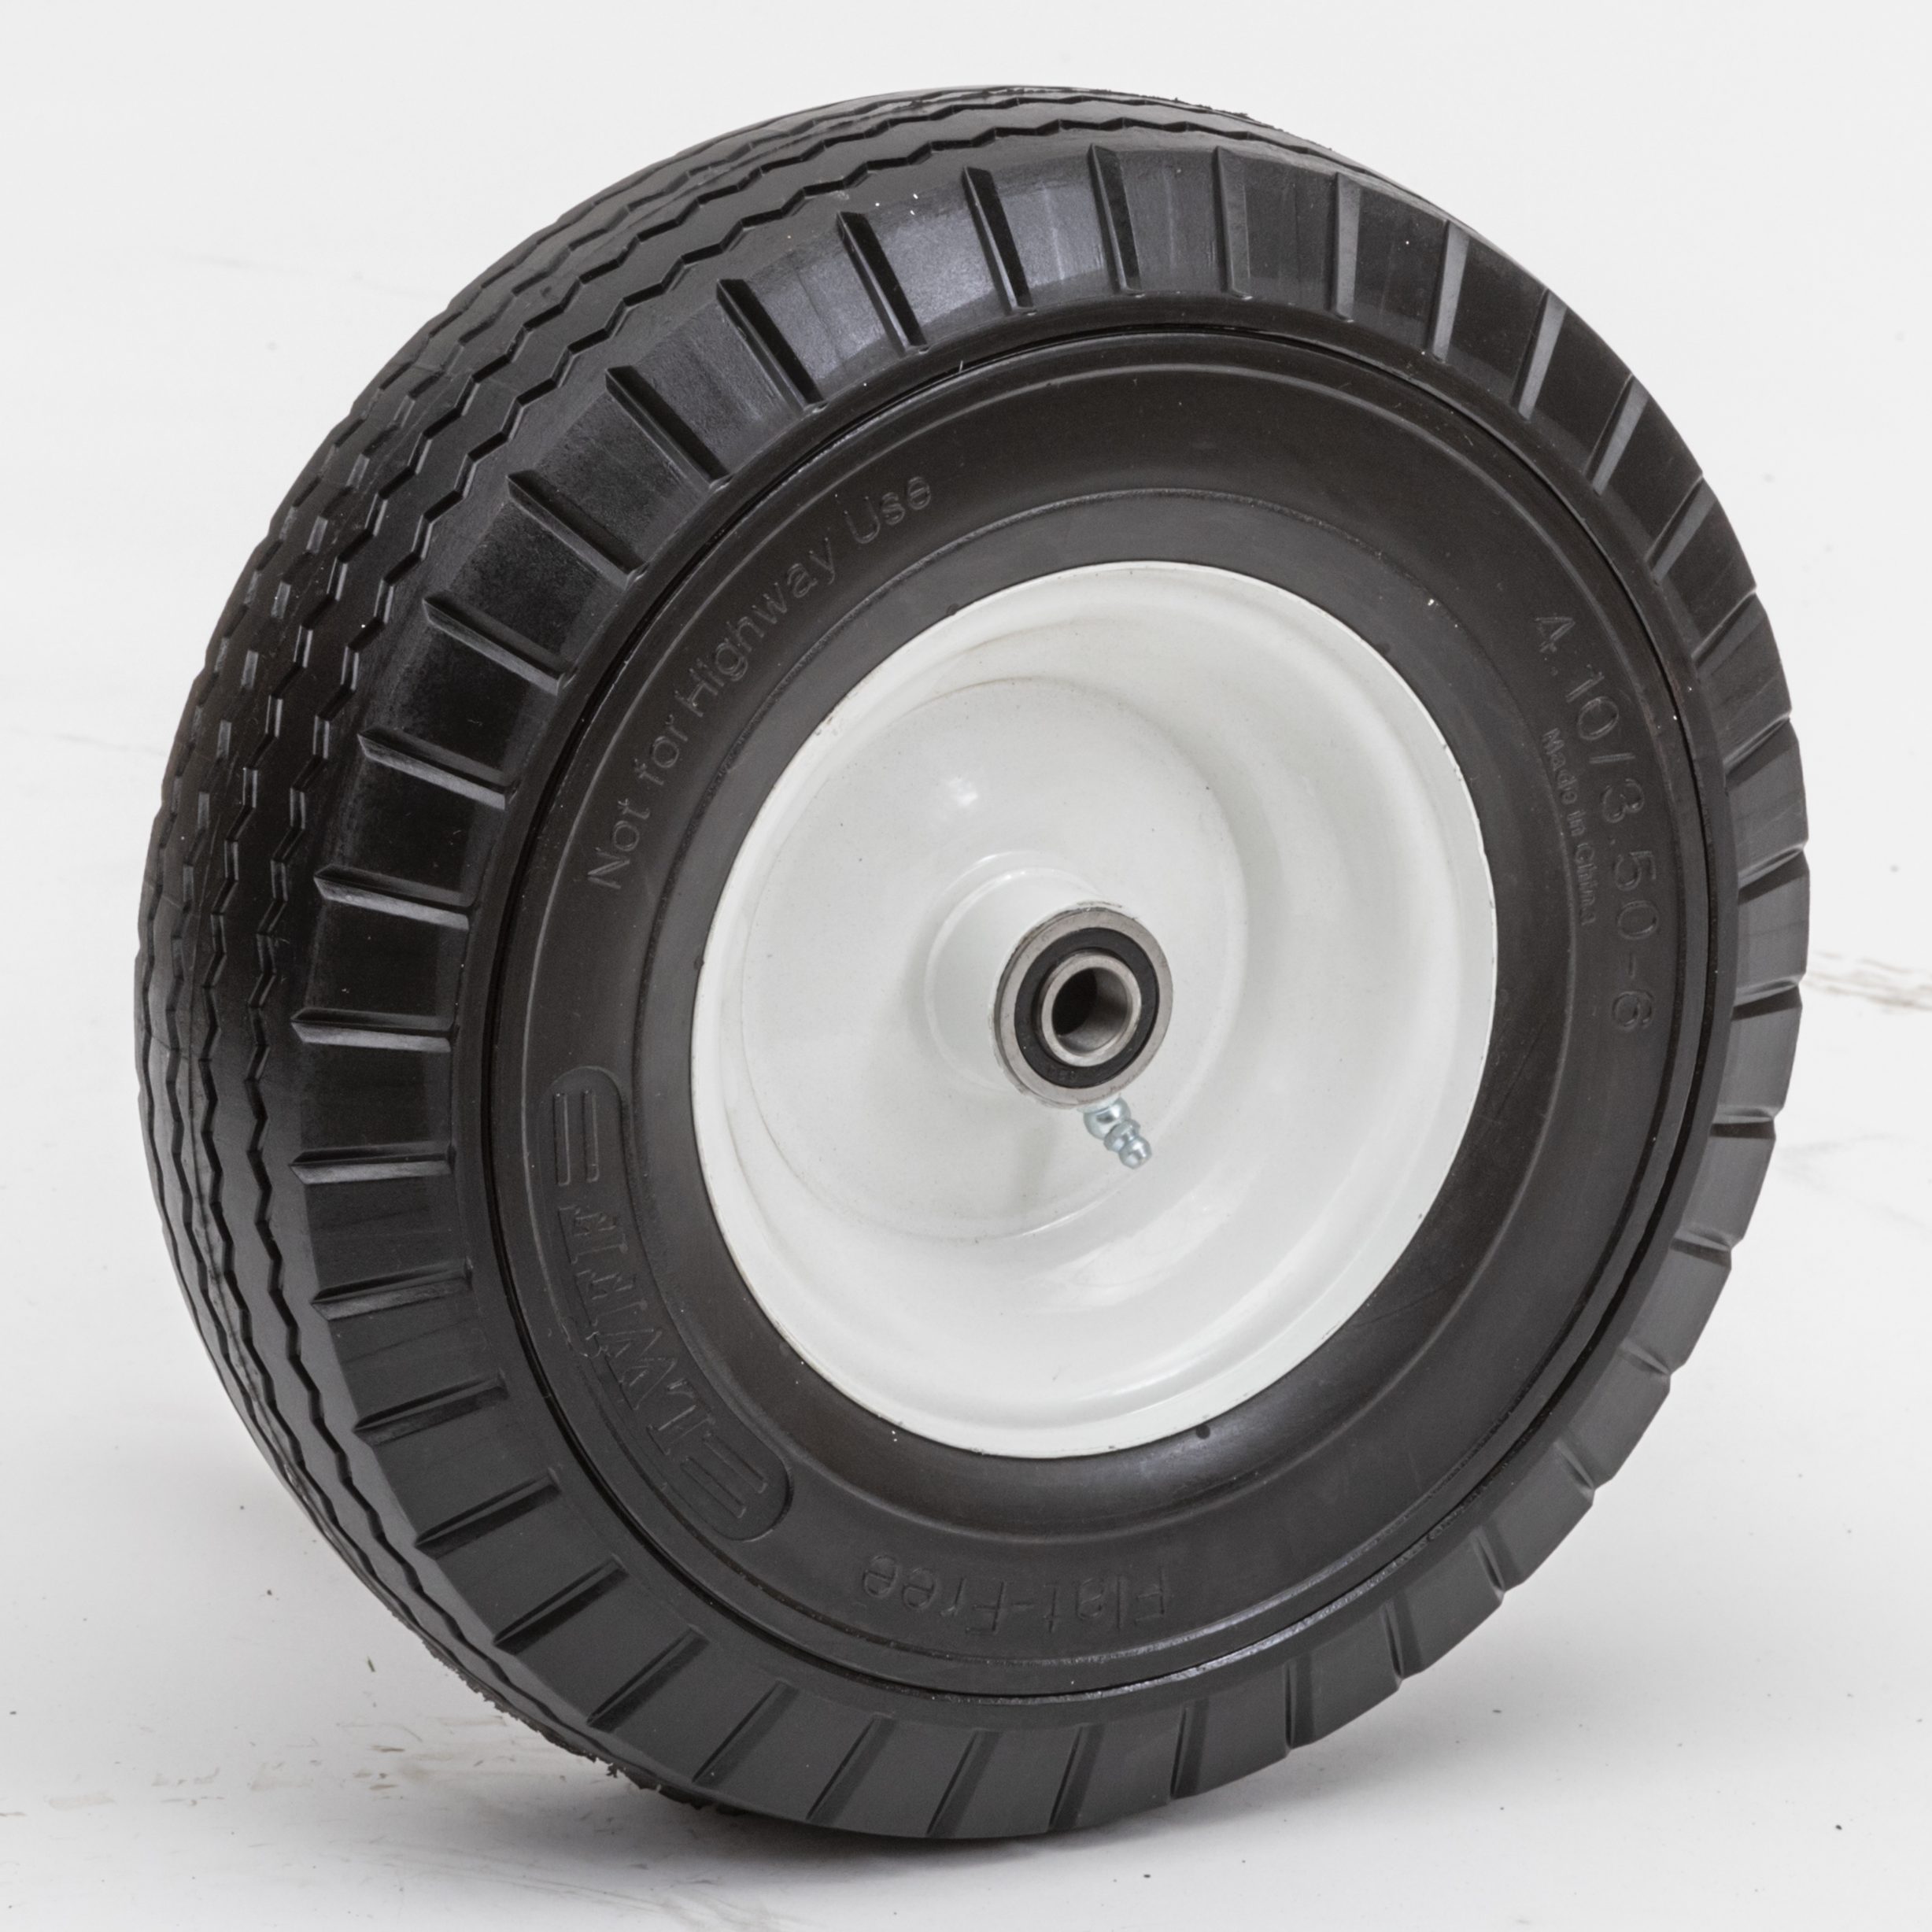 1/2 Bearings BAIVE BW 2.80/2.50-4 Solid Wheelbarrow Tire Non-Slip Flat Free Wheel with 3 Offset Hub 